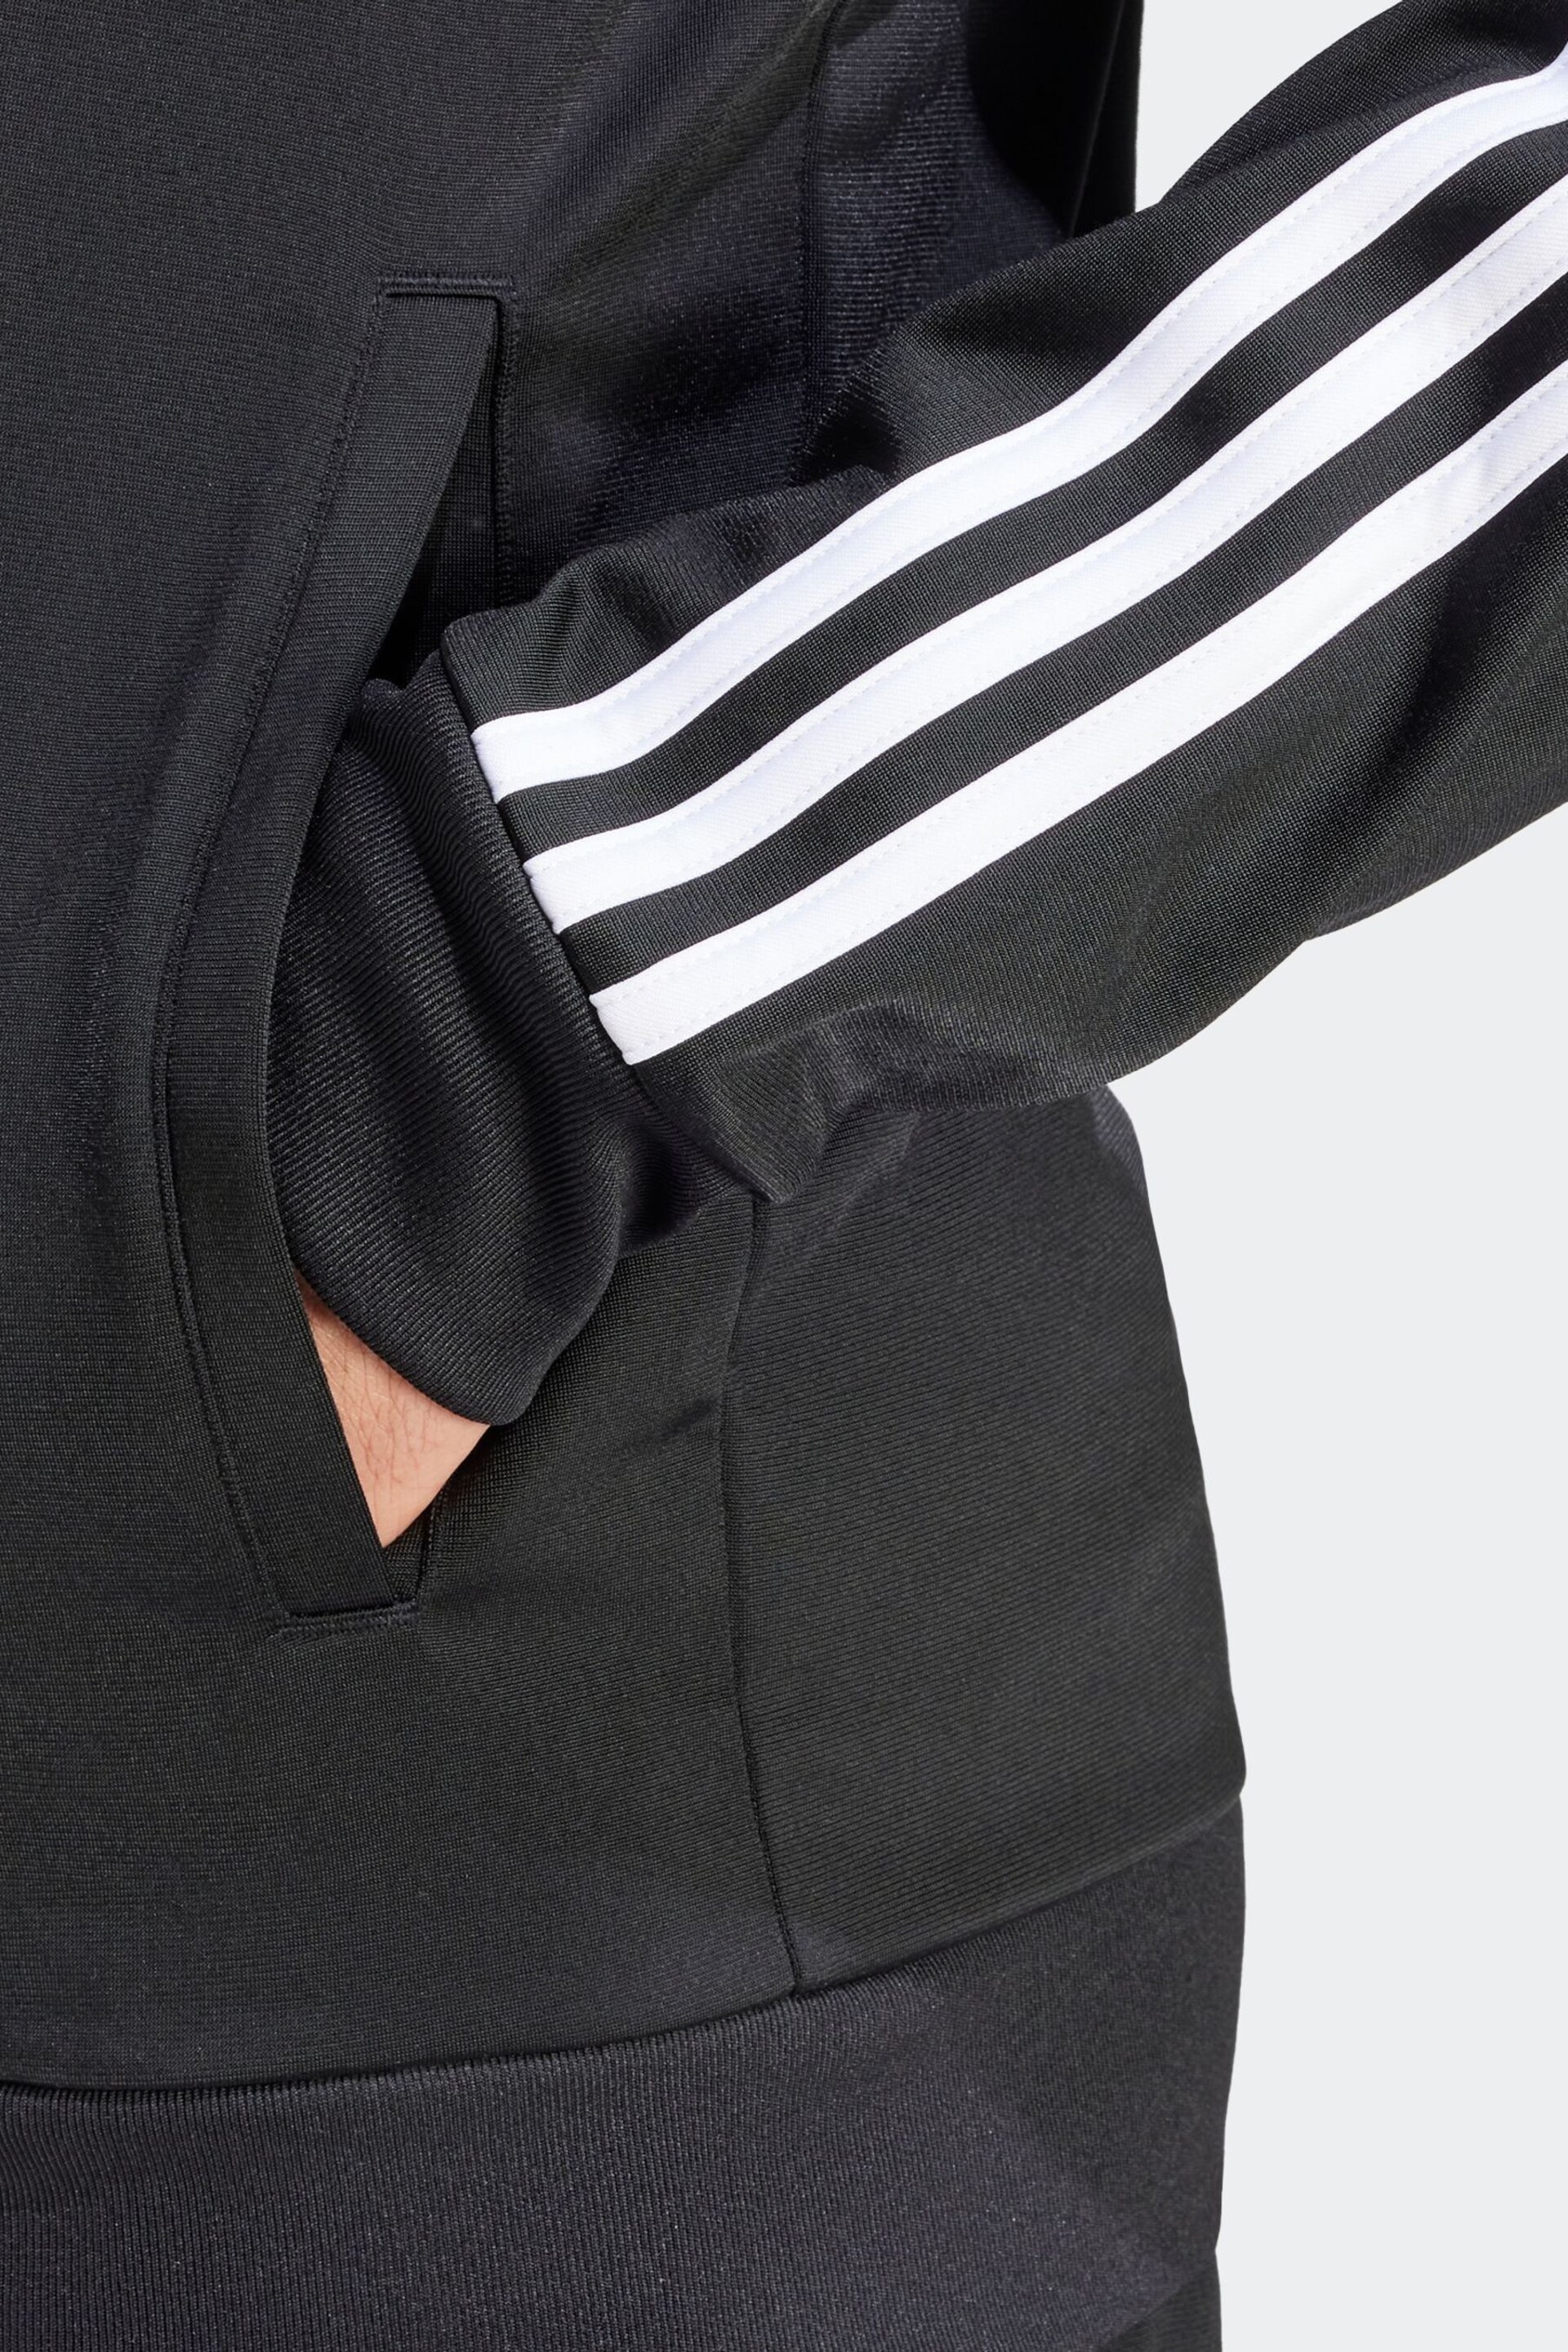 adidas Black Sportswear Essentials Warm-Up 3-Stripes Track Top - Image 5 of 6